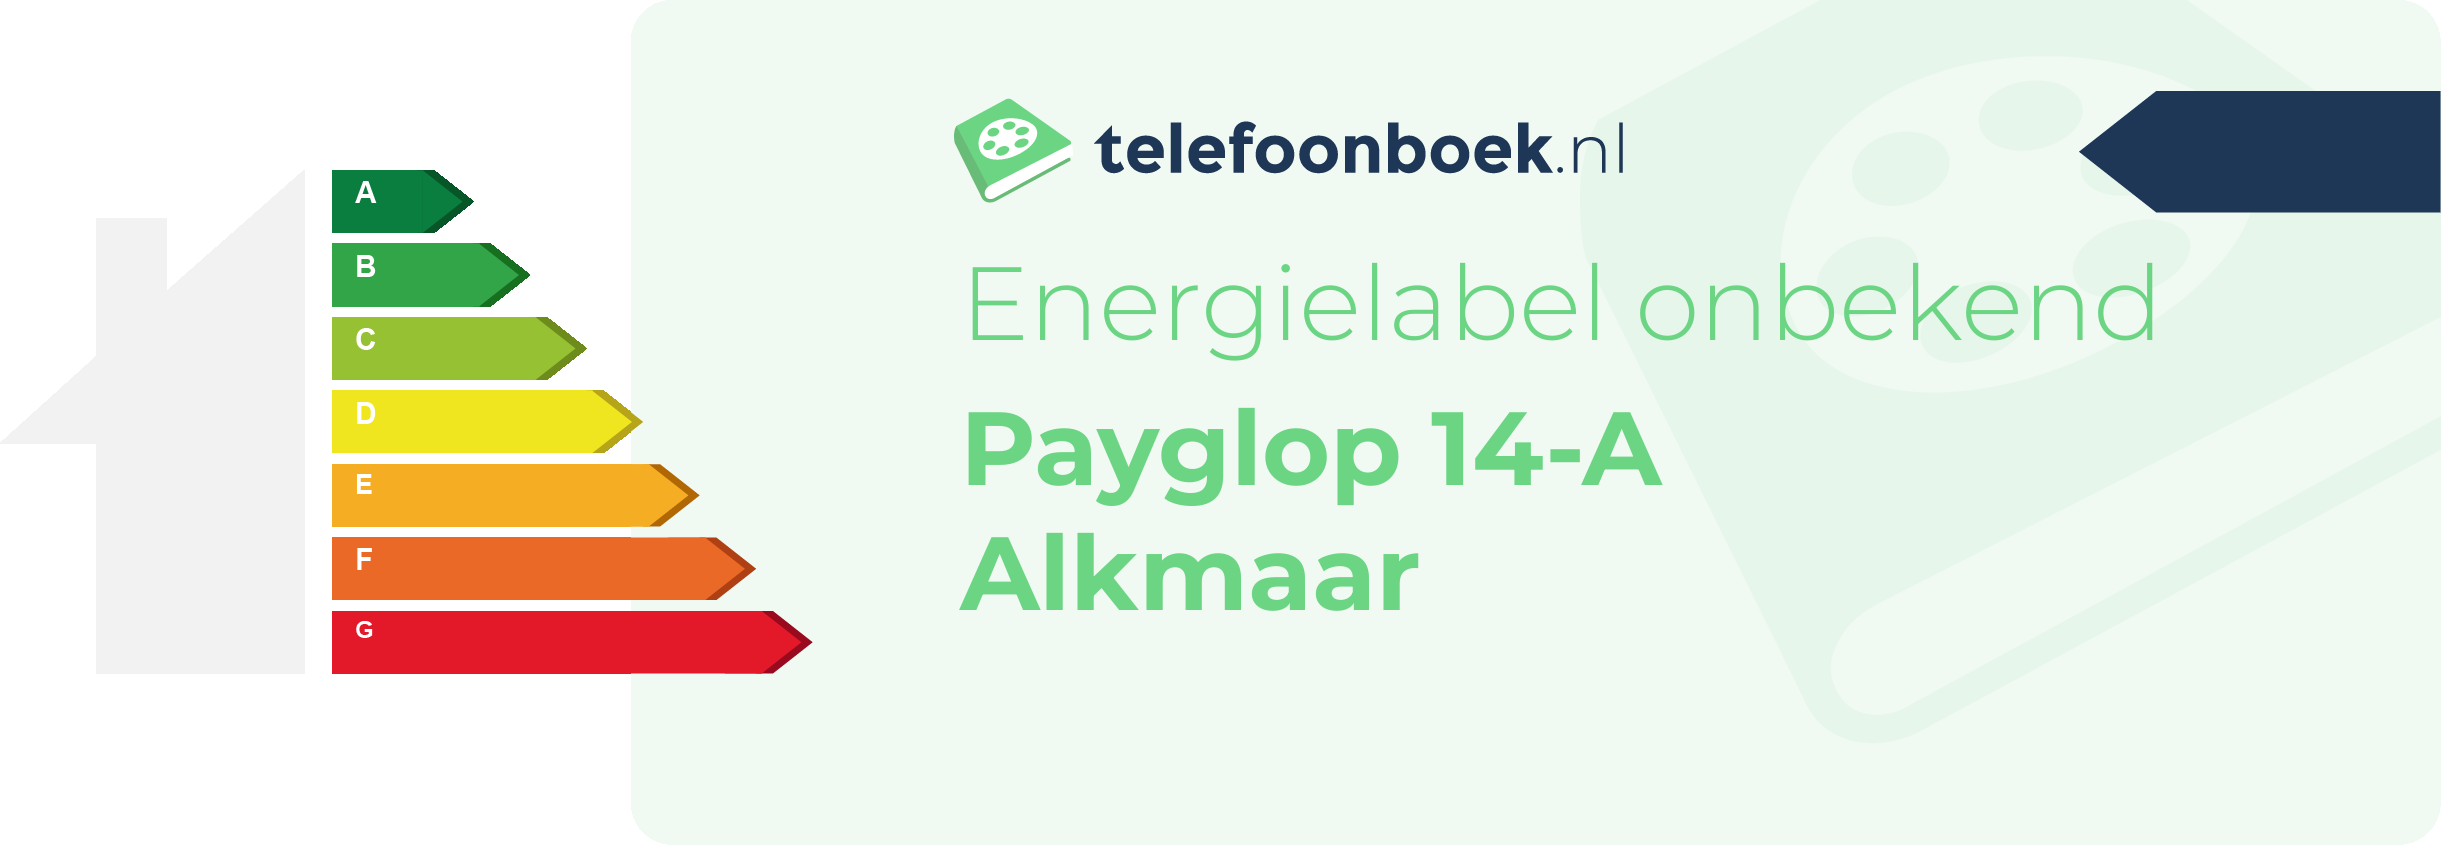 Energielabel Payglop 14-A Alkmaar